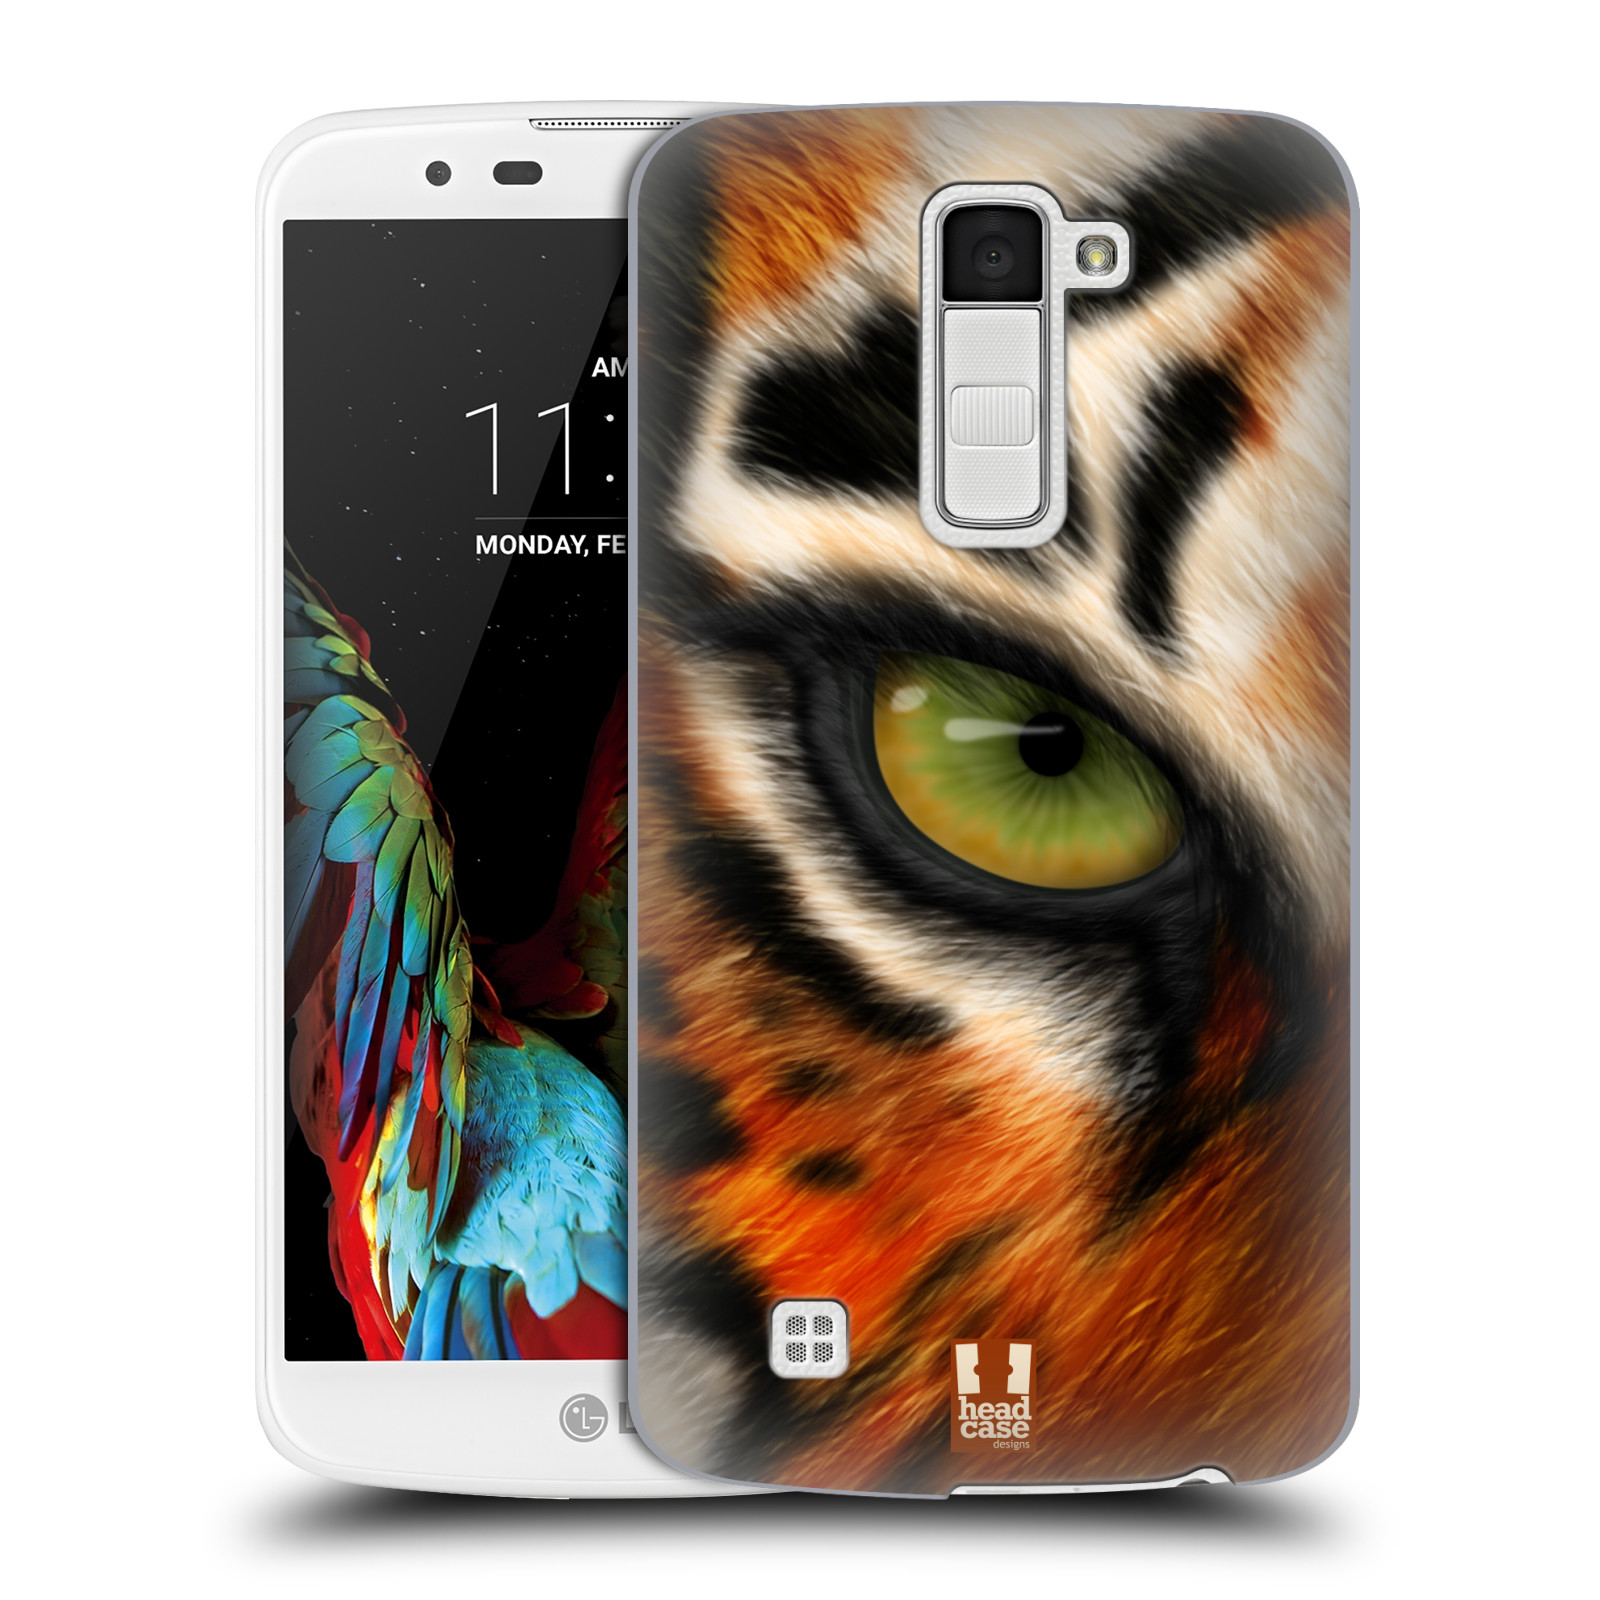 HEAD CASE plastový obal na mobil LG K10 vzor pohled zvířete oko tygr